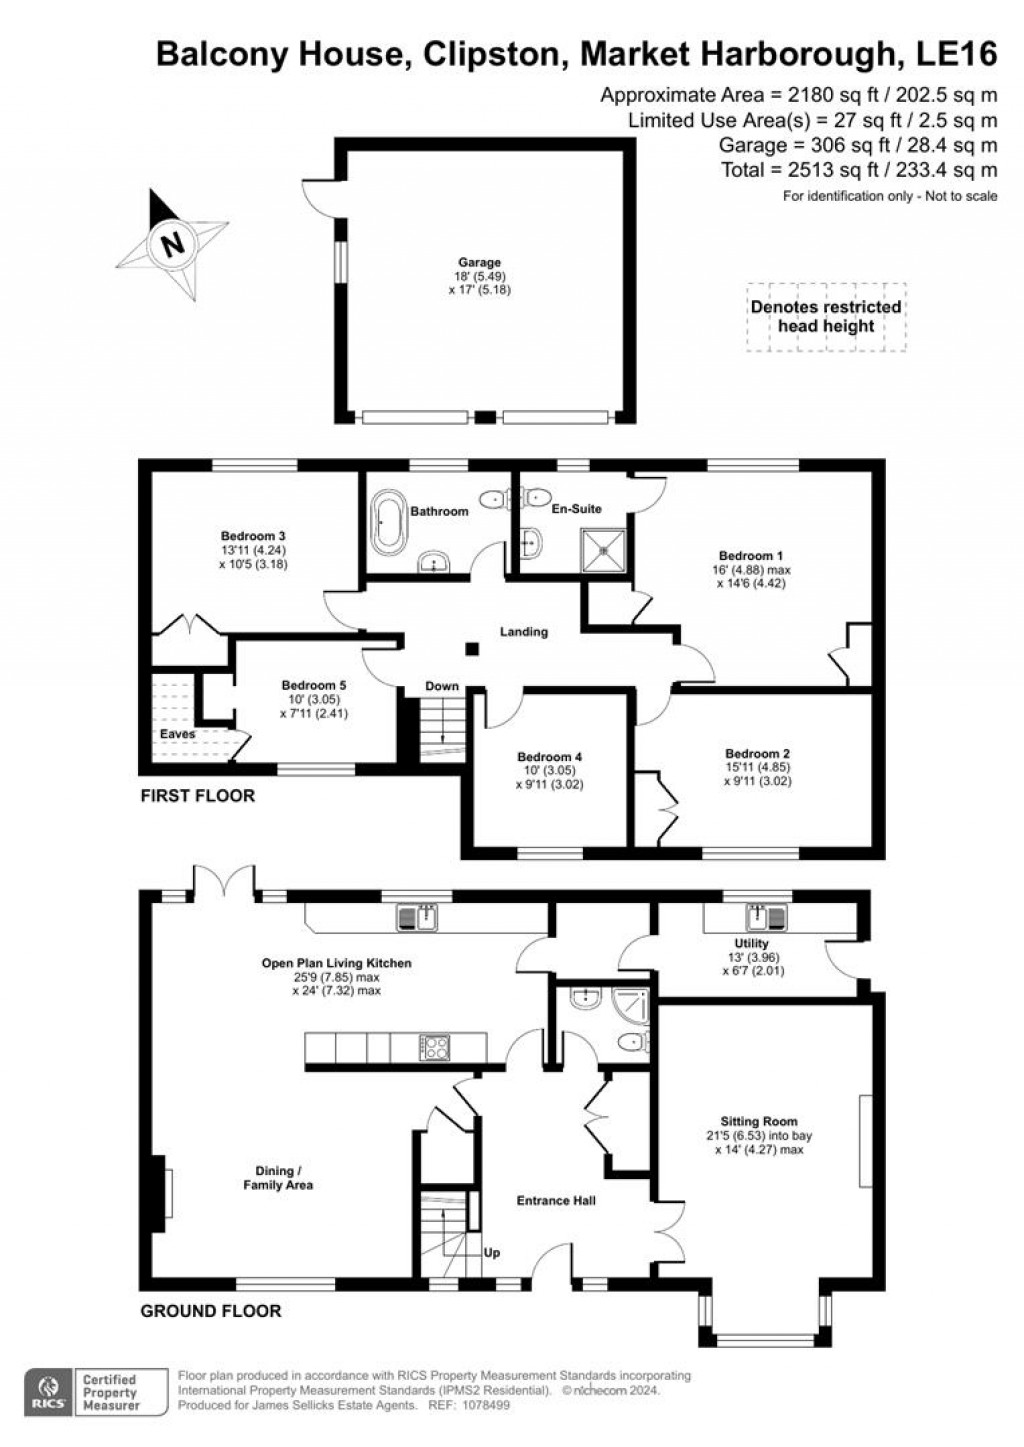 Floorplans For Balcony House, Clipston, Market Harborough